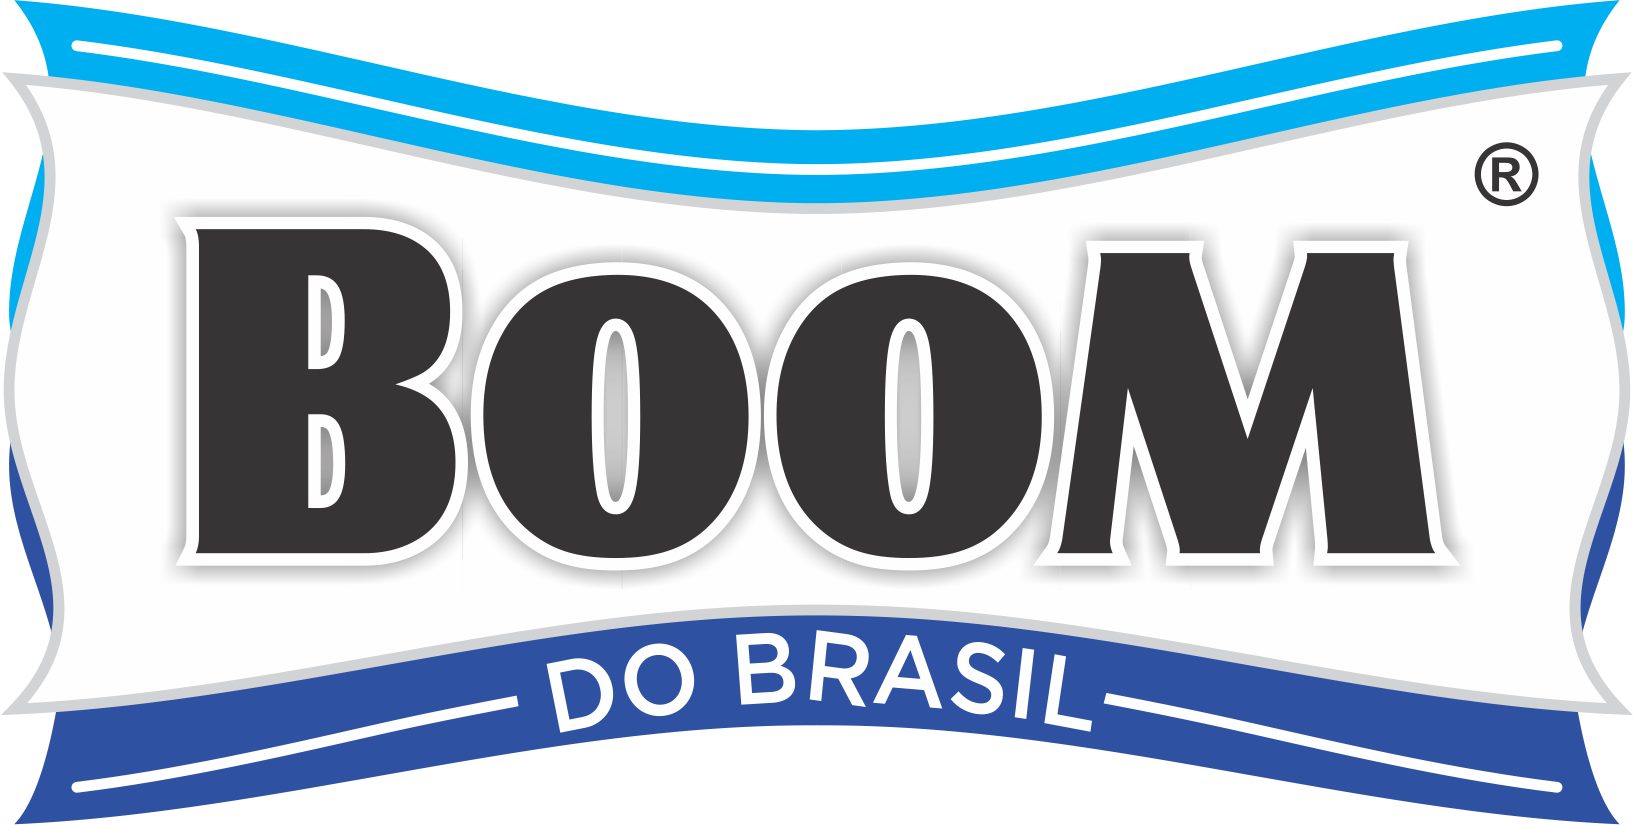 LOGO BOOM boom02